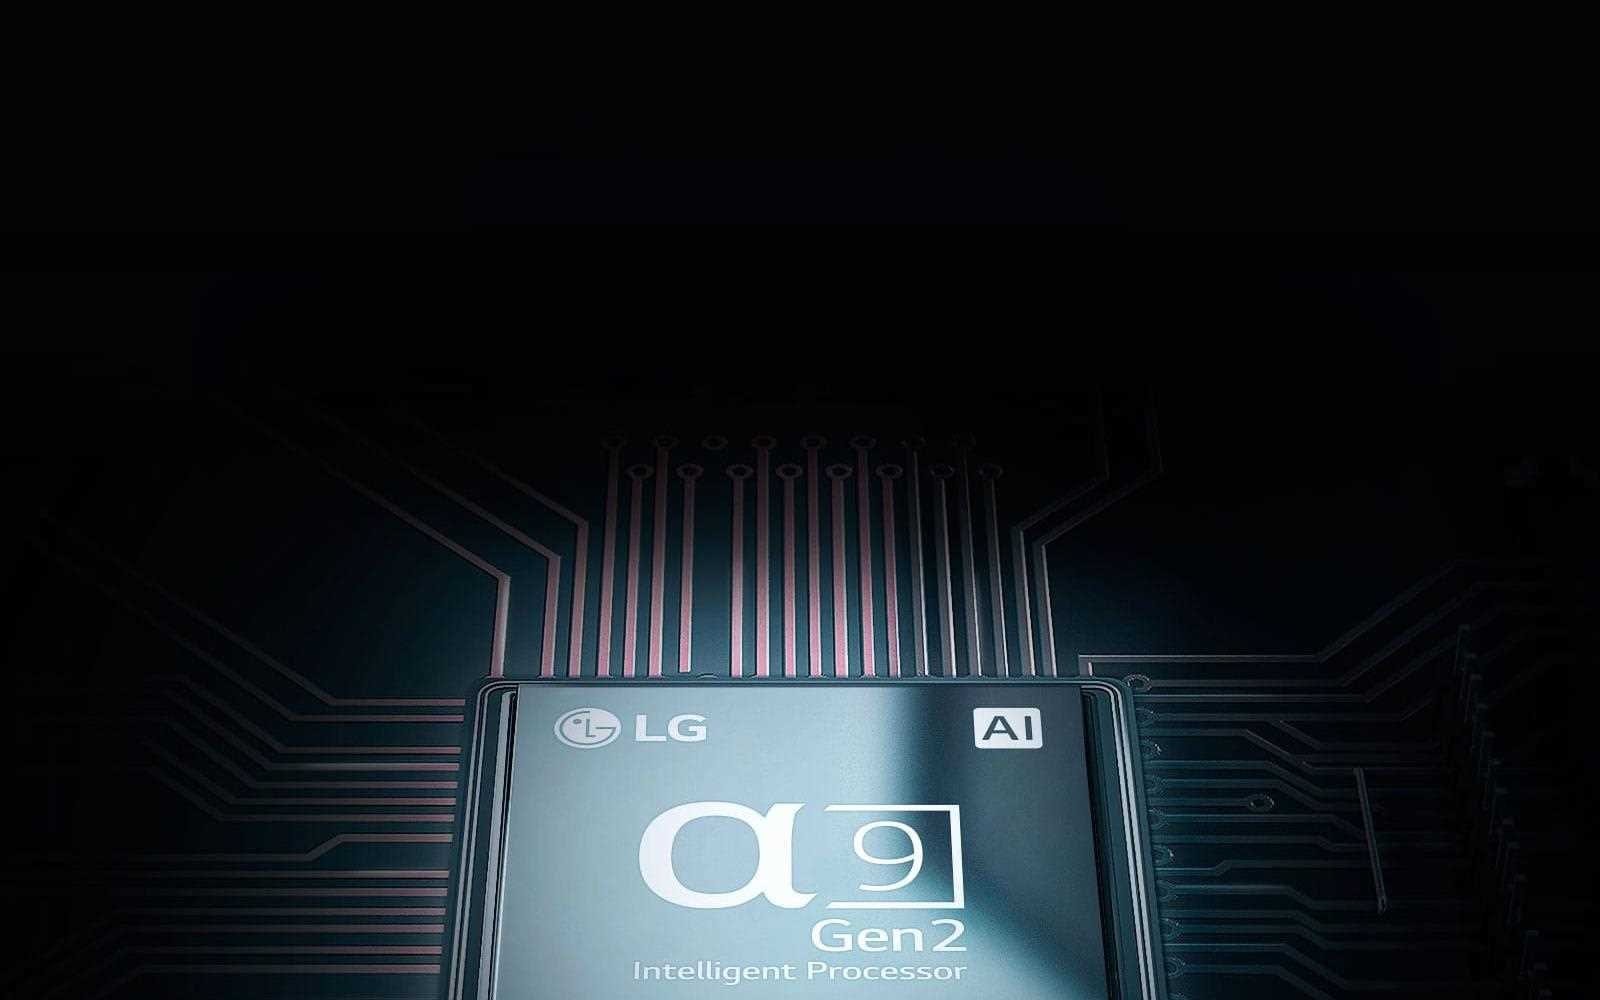 Procesor alfa9 w TV LG